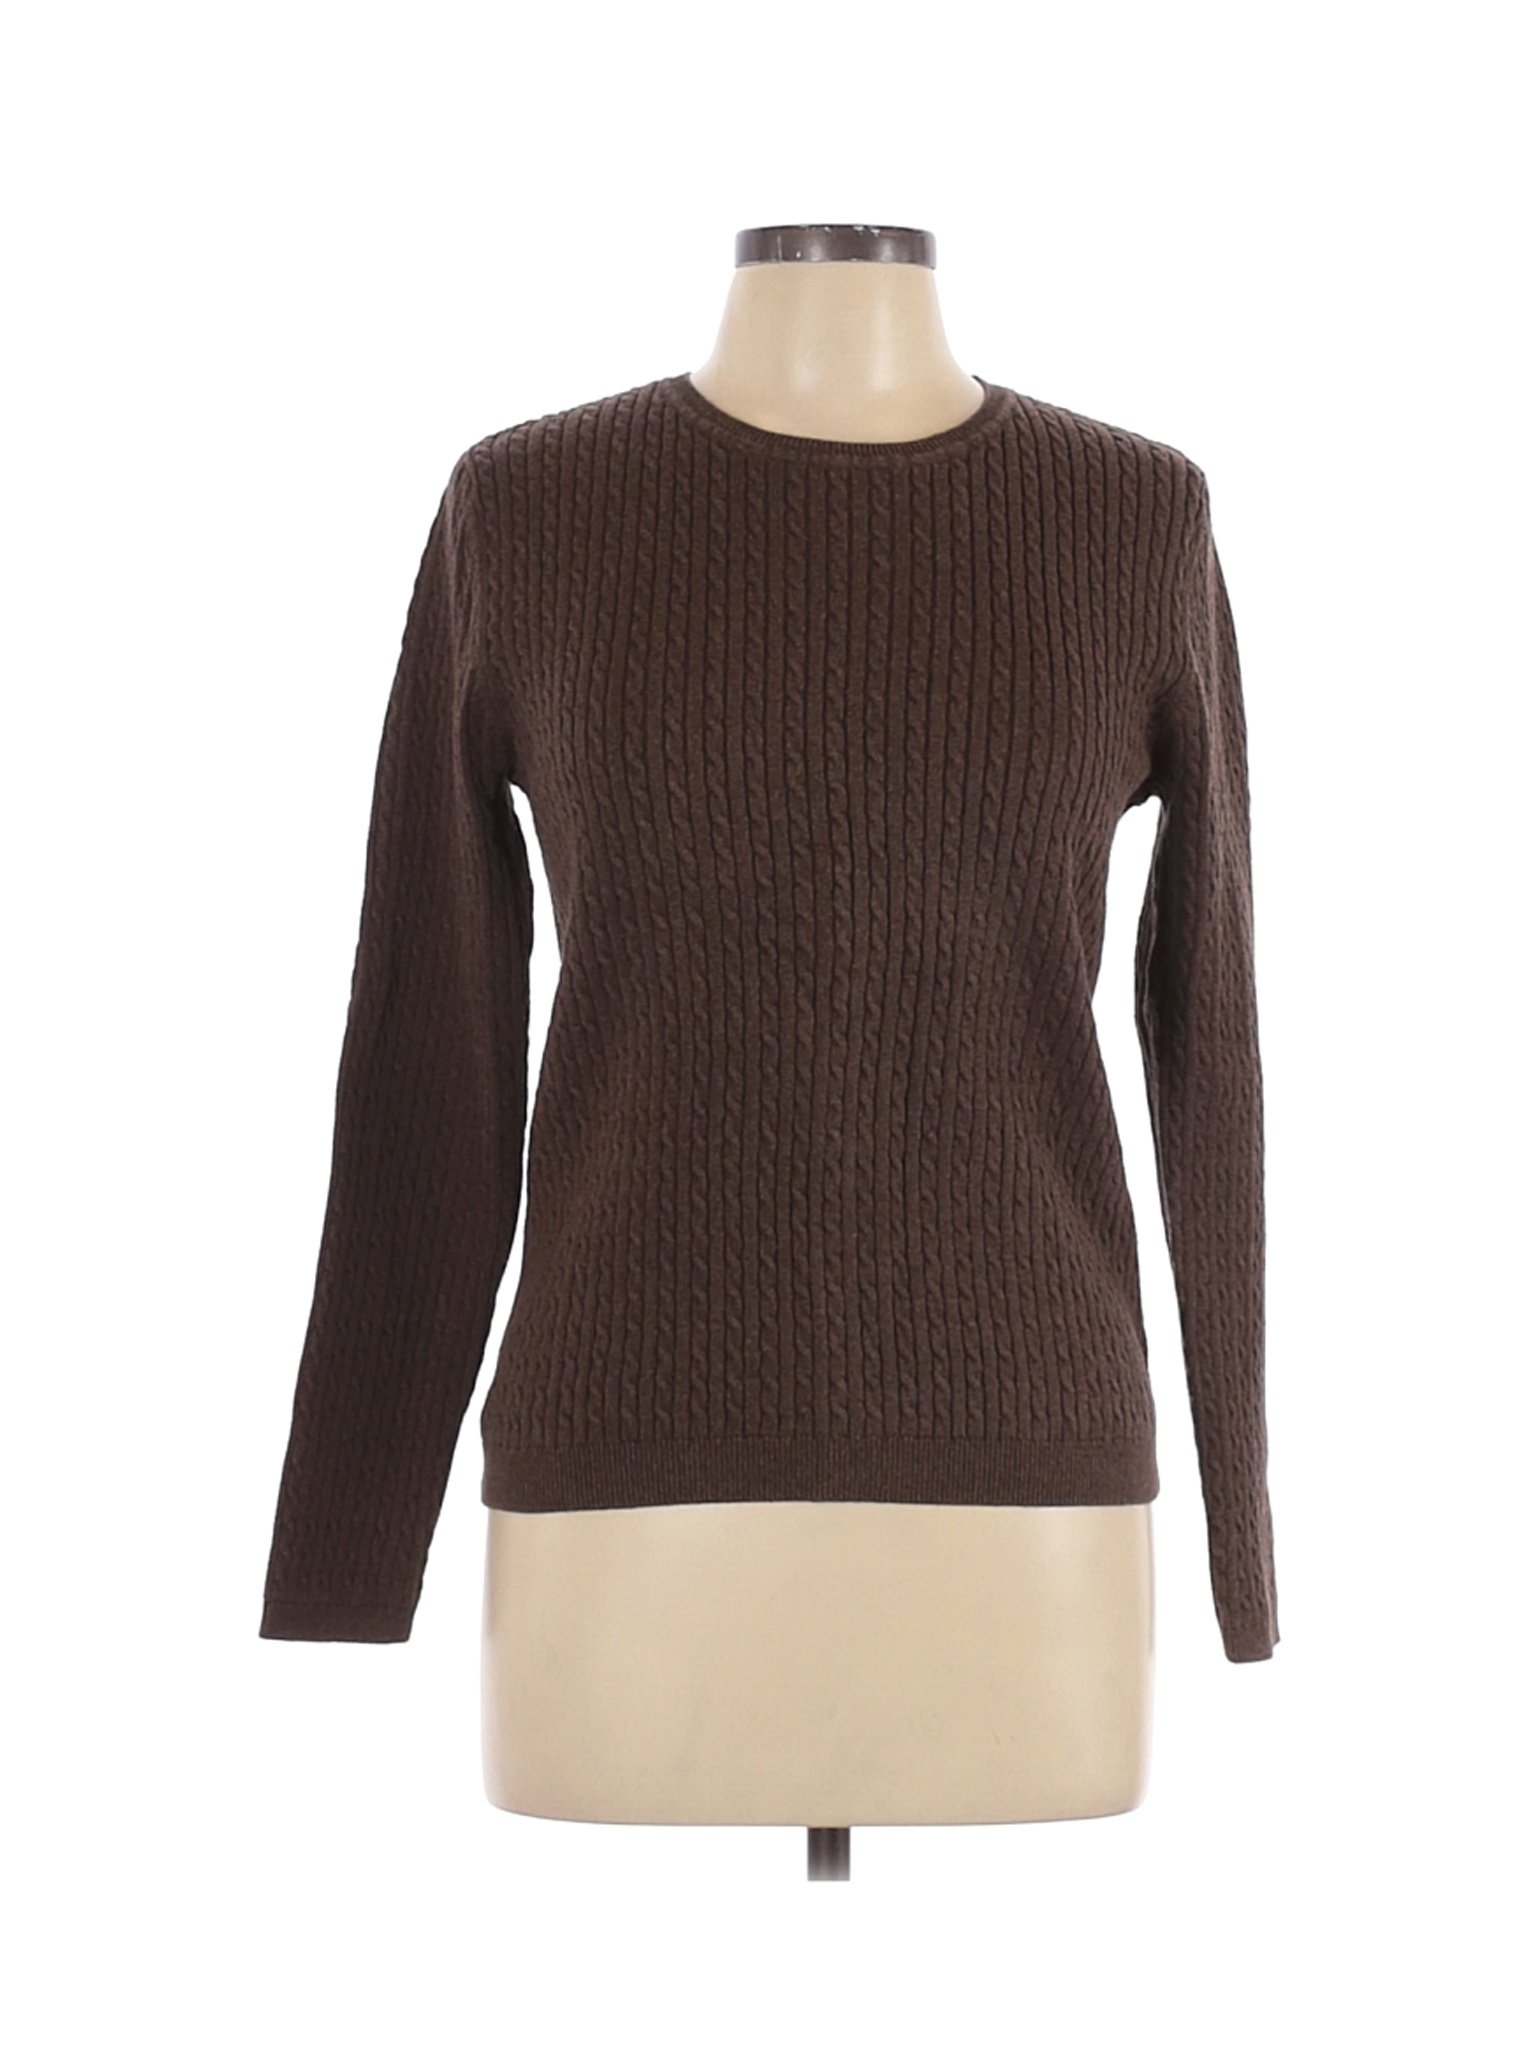 Croft & Barrow Women Brown Pullover Sweater L | eBay